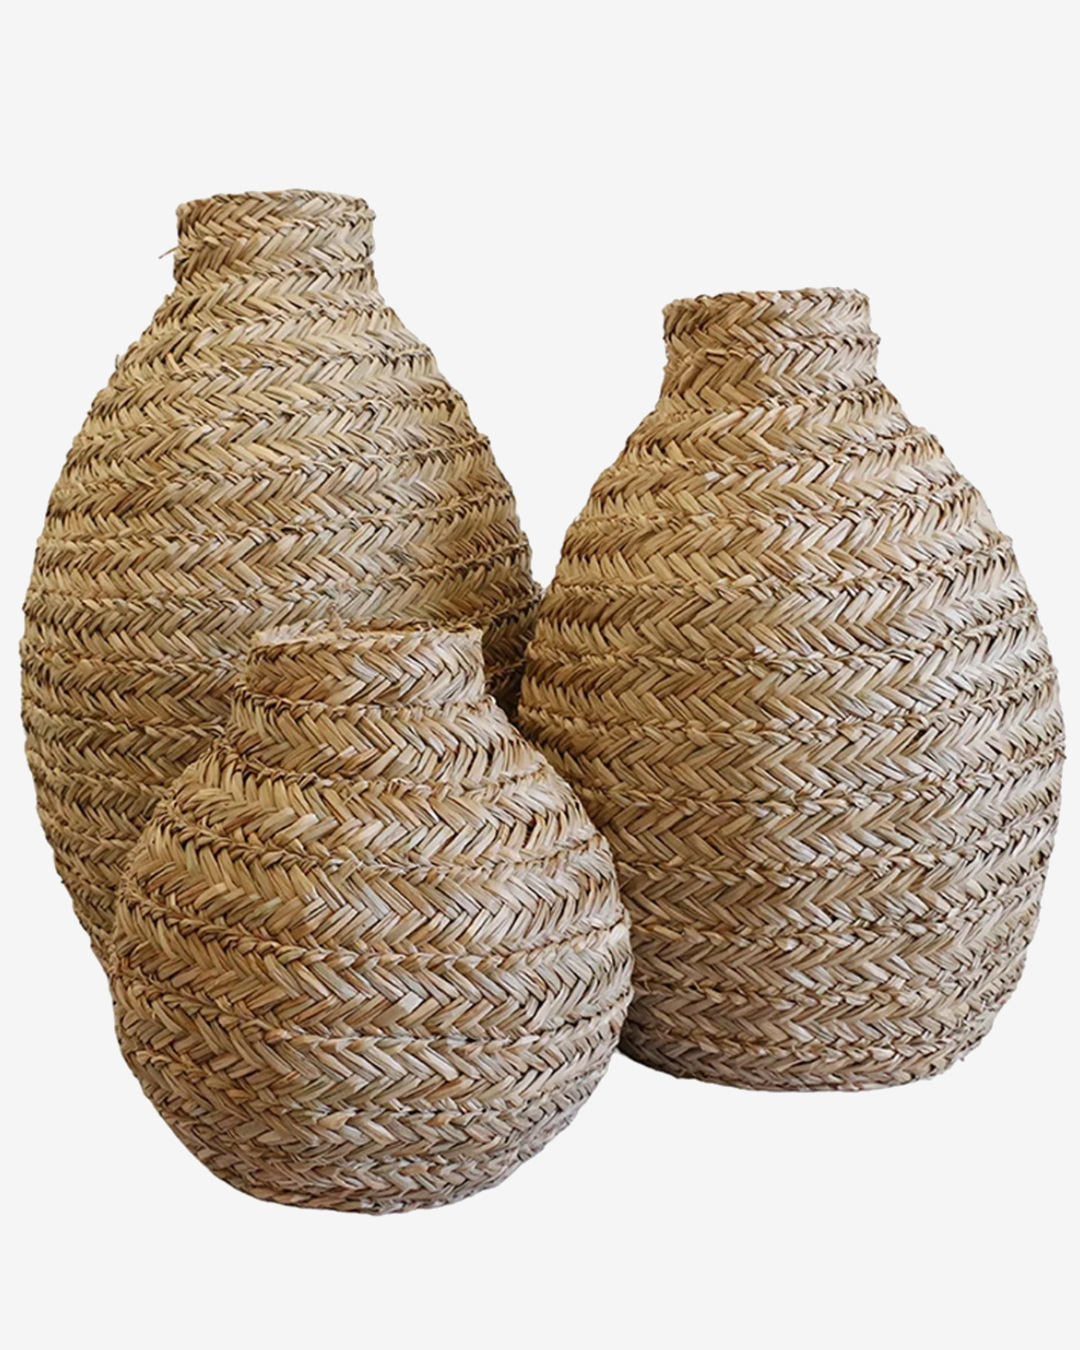 Seagrass woven urn baskets